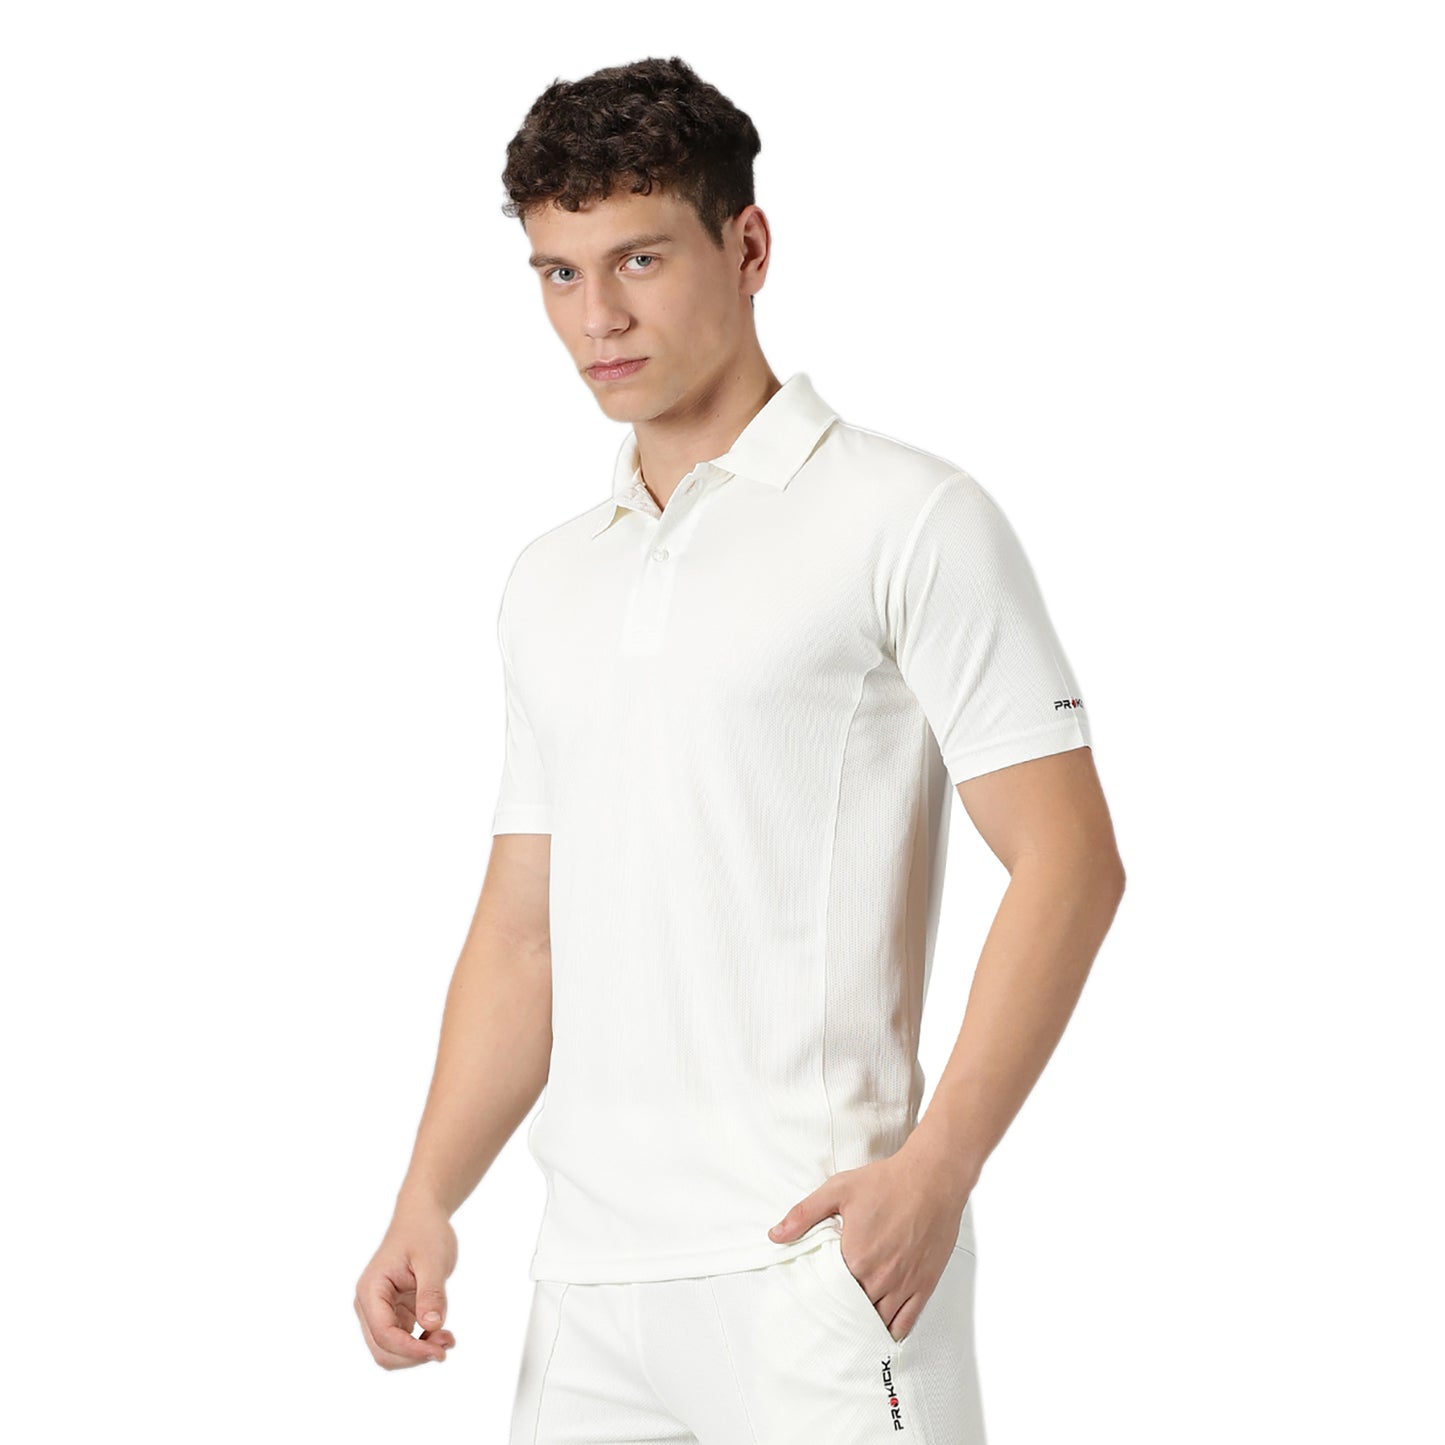 Prokick Elite Half Sleeves Cricket T-Shirt, Off White - Best Price online Prokicksports.com